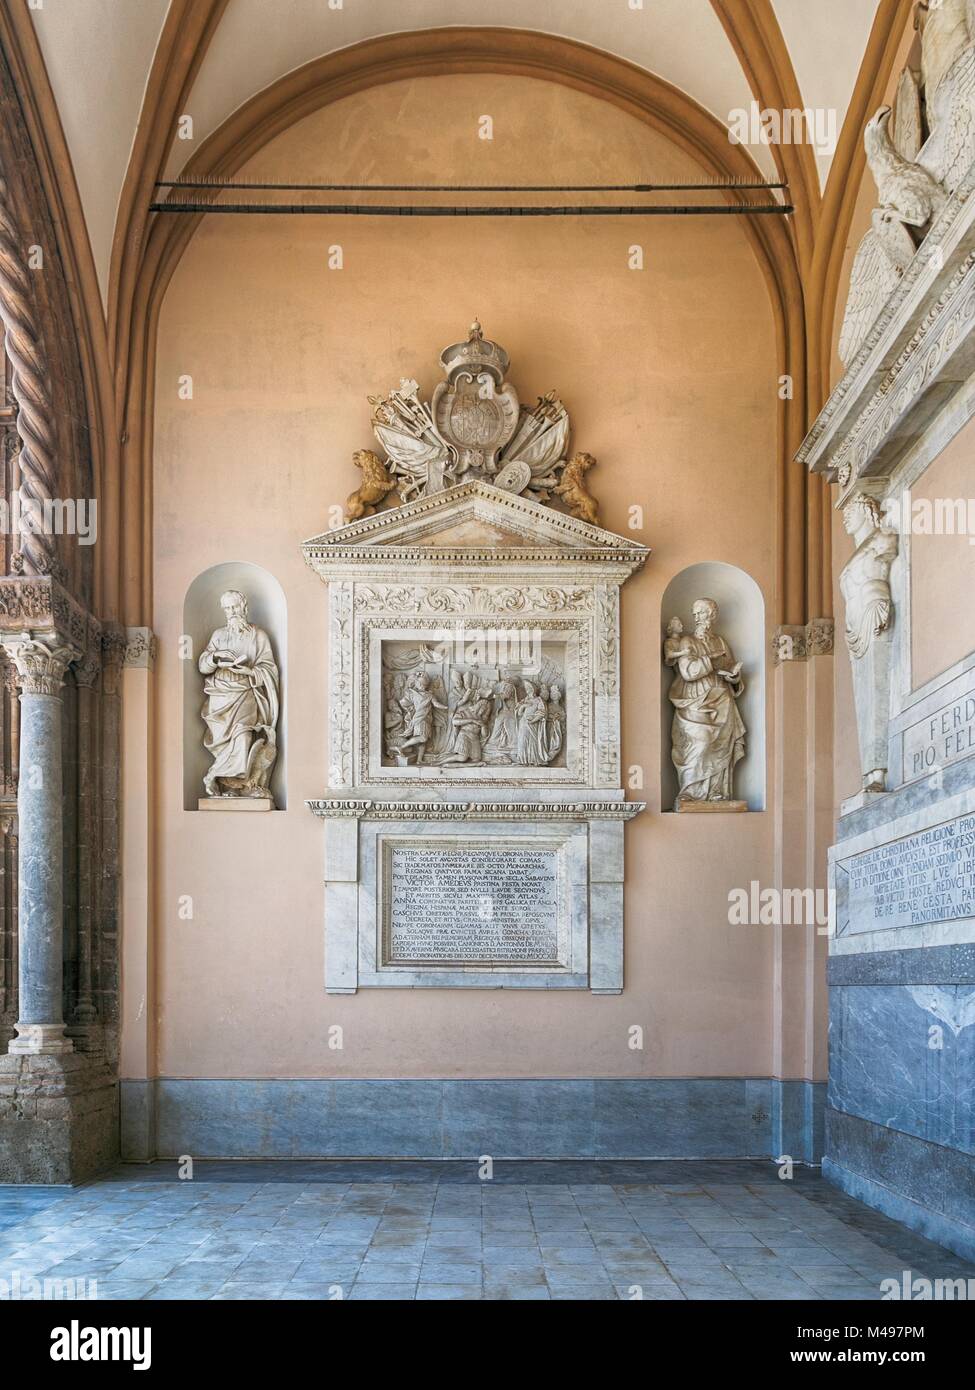 Interiér Catedral de Palermo, Sicilia, Itálie Foto de stock